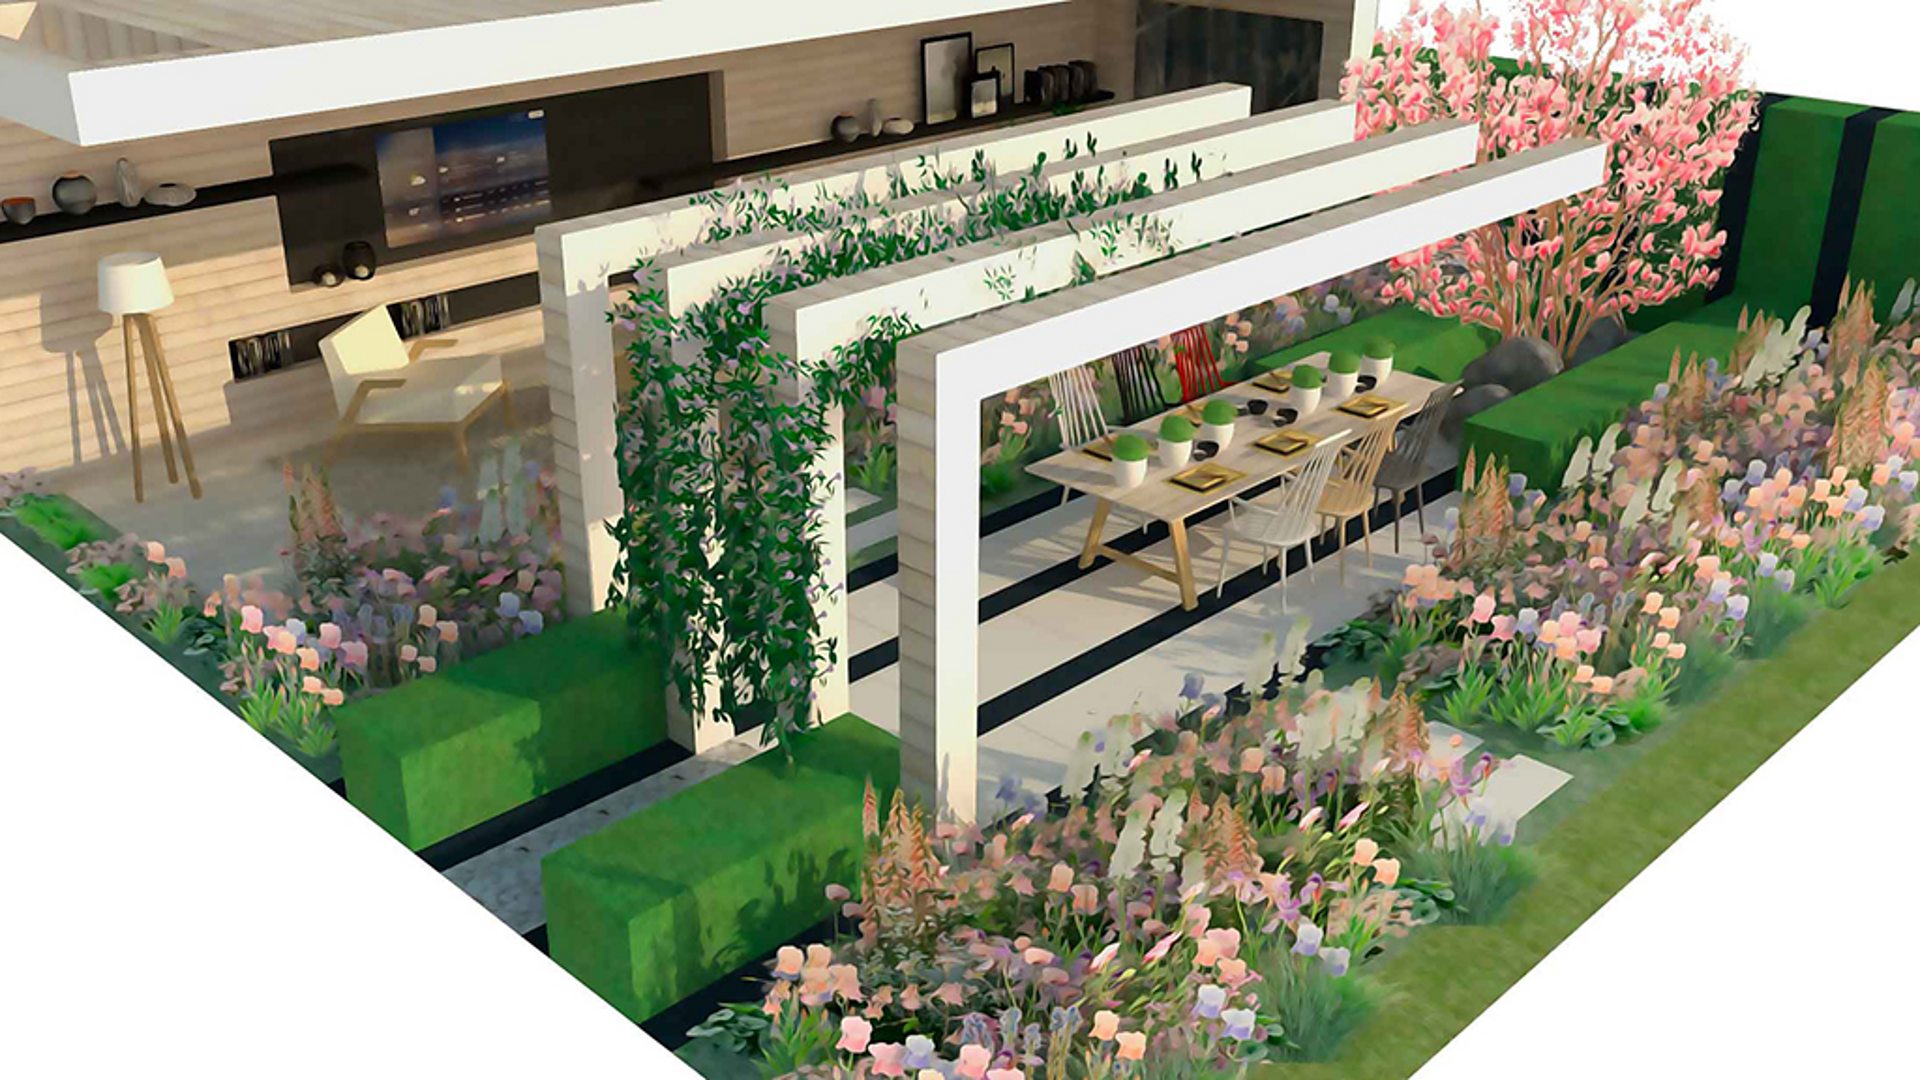 bbc two - rhs chelsea flower show - the lg smart garden